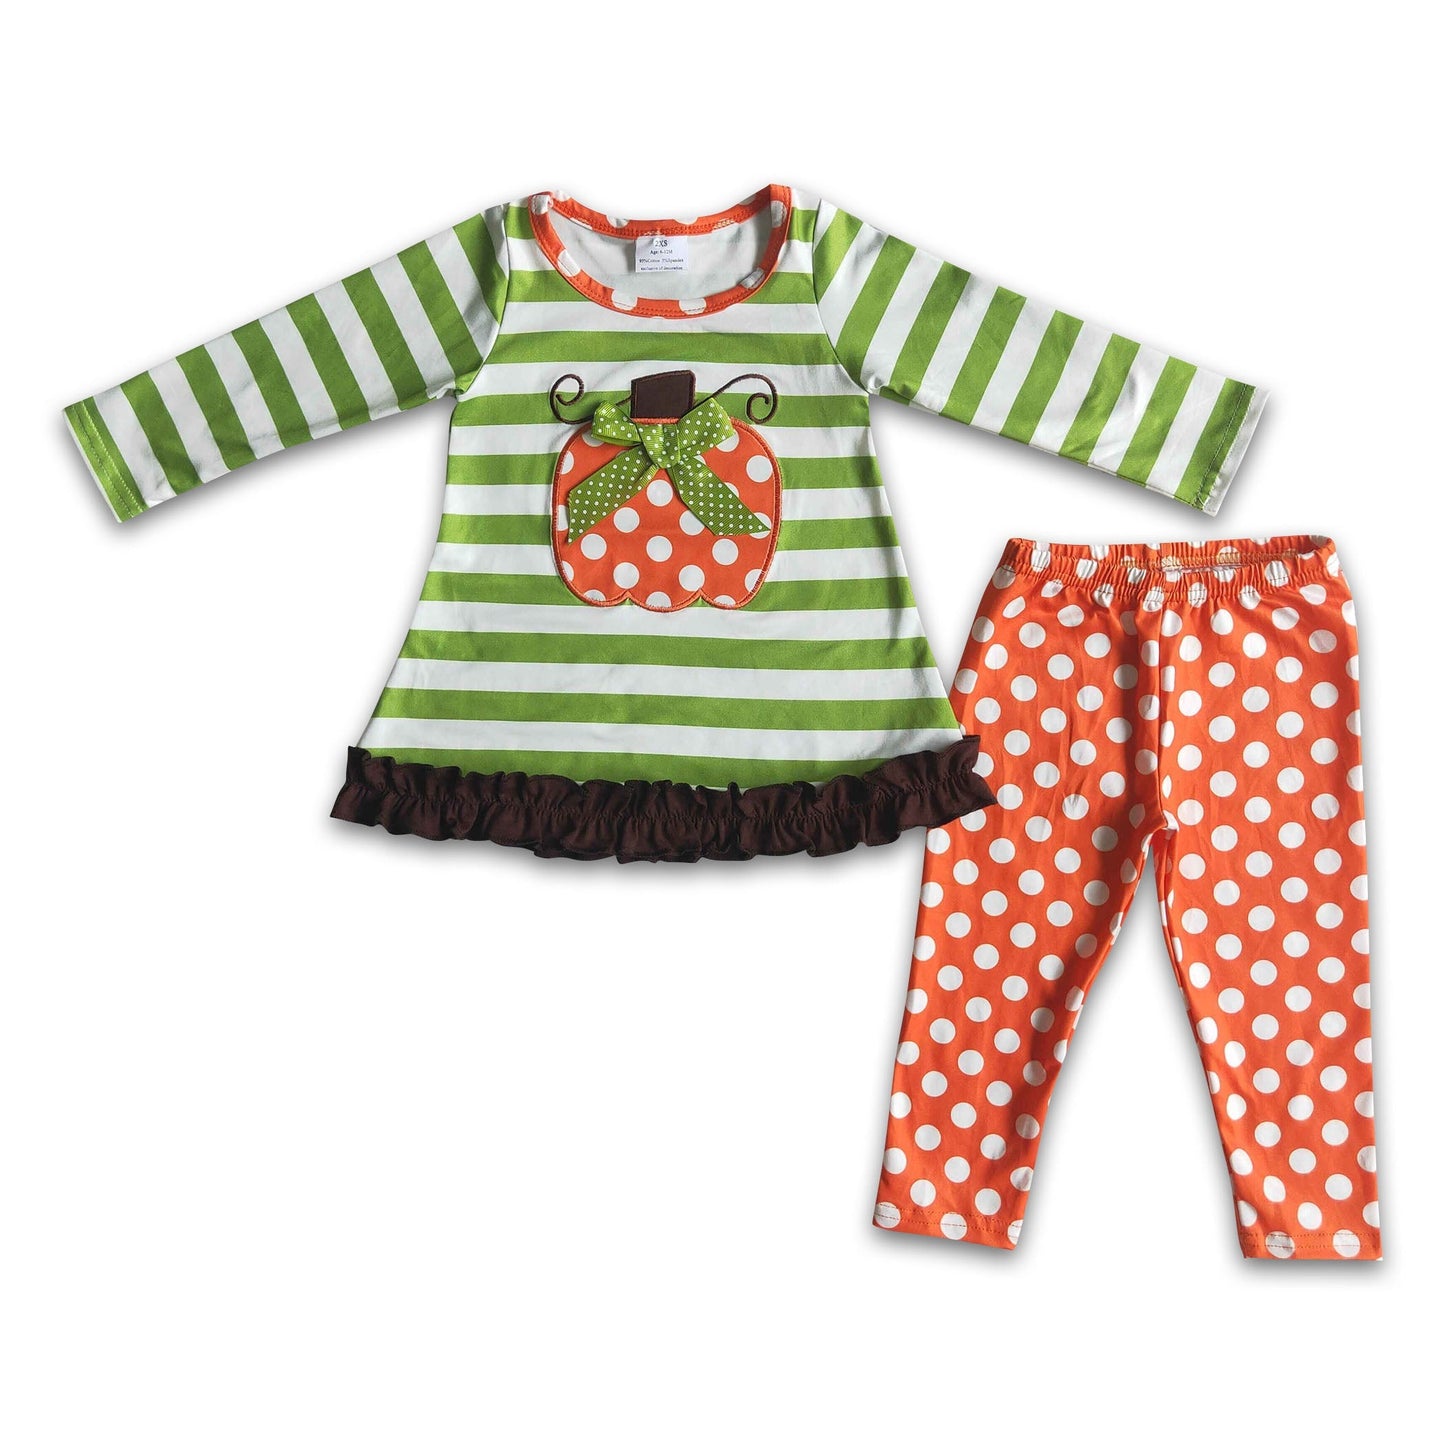 Pumpkin embroidery polka dots leggings girls outfits